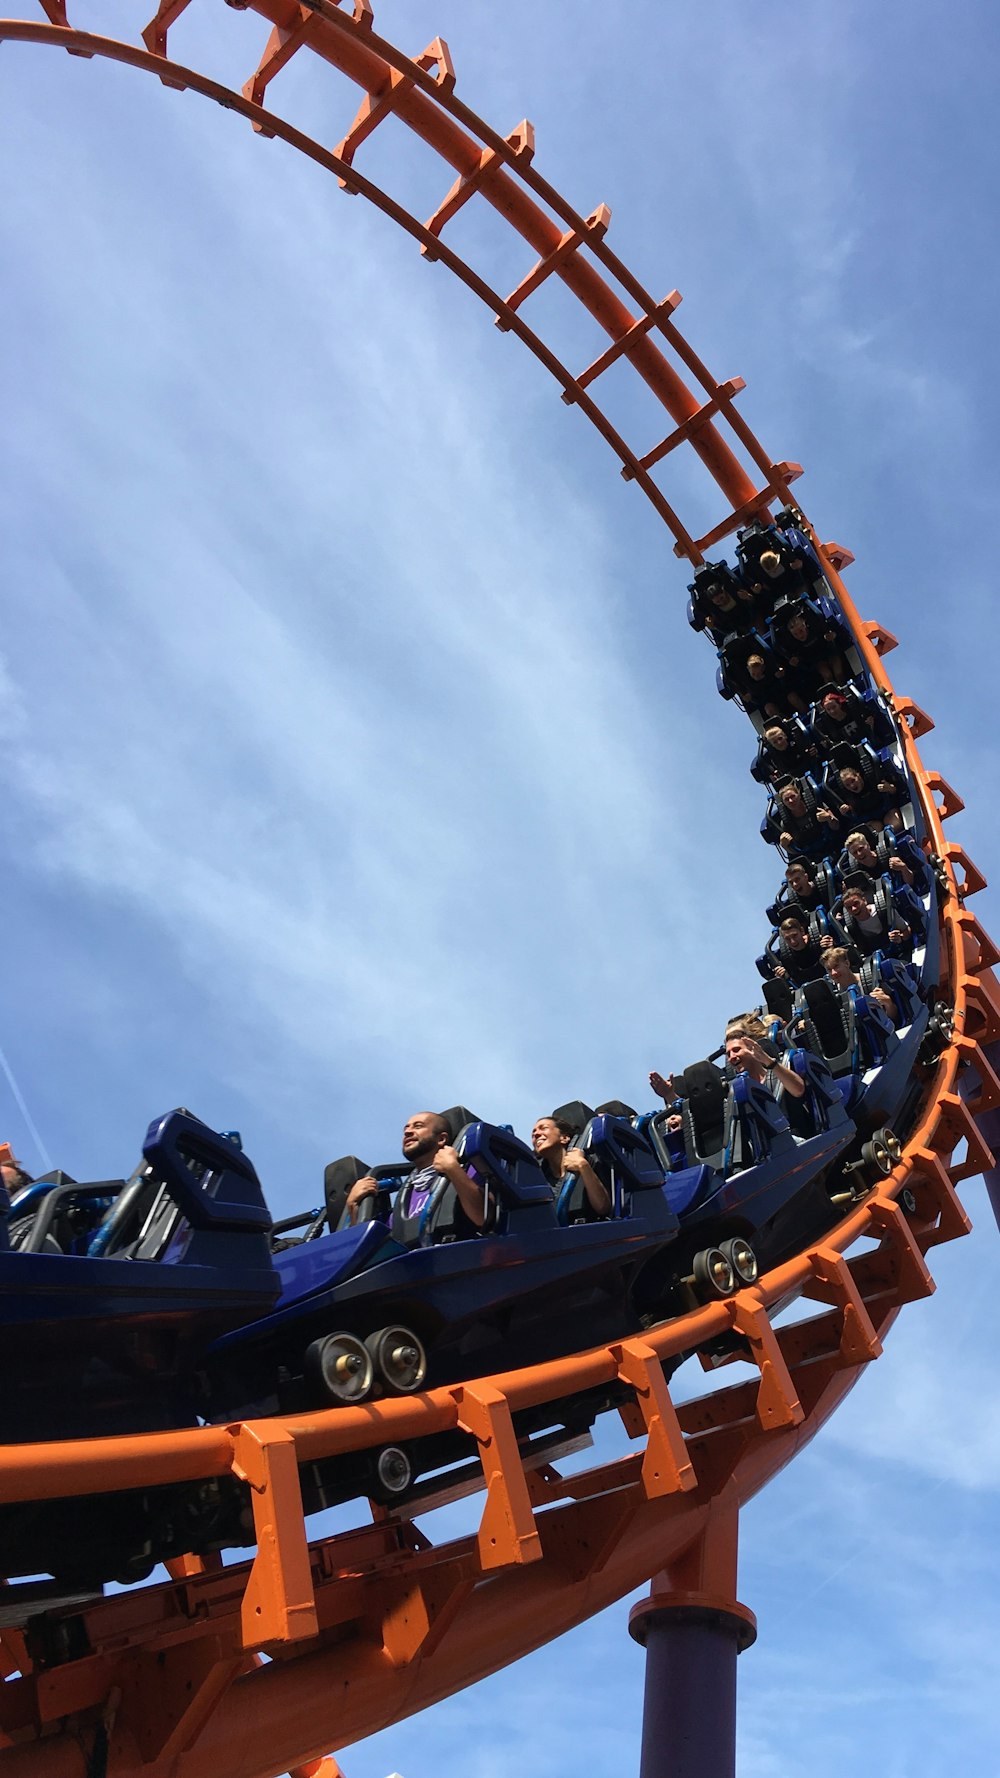 750 Roller Coaster Pictures Hd Download Free Images On Unsplash